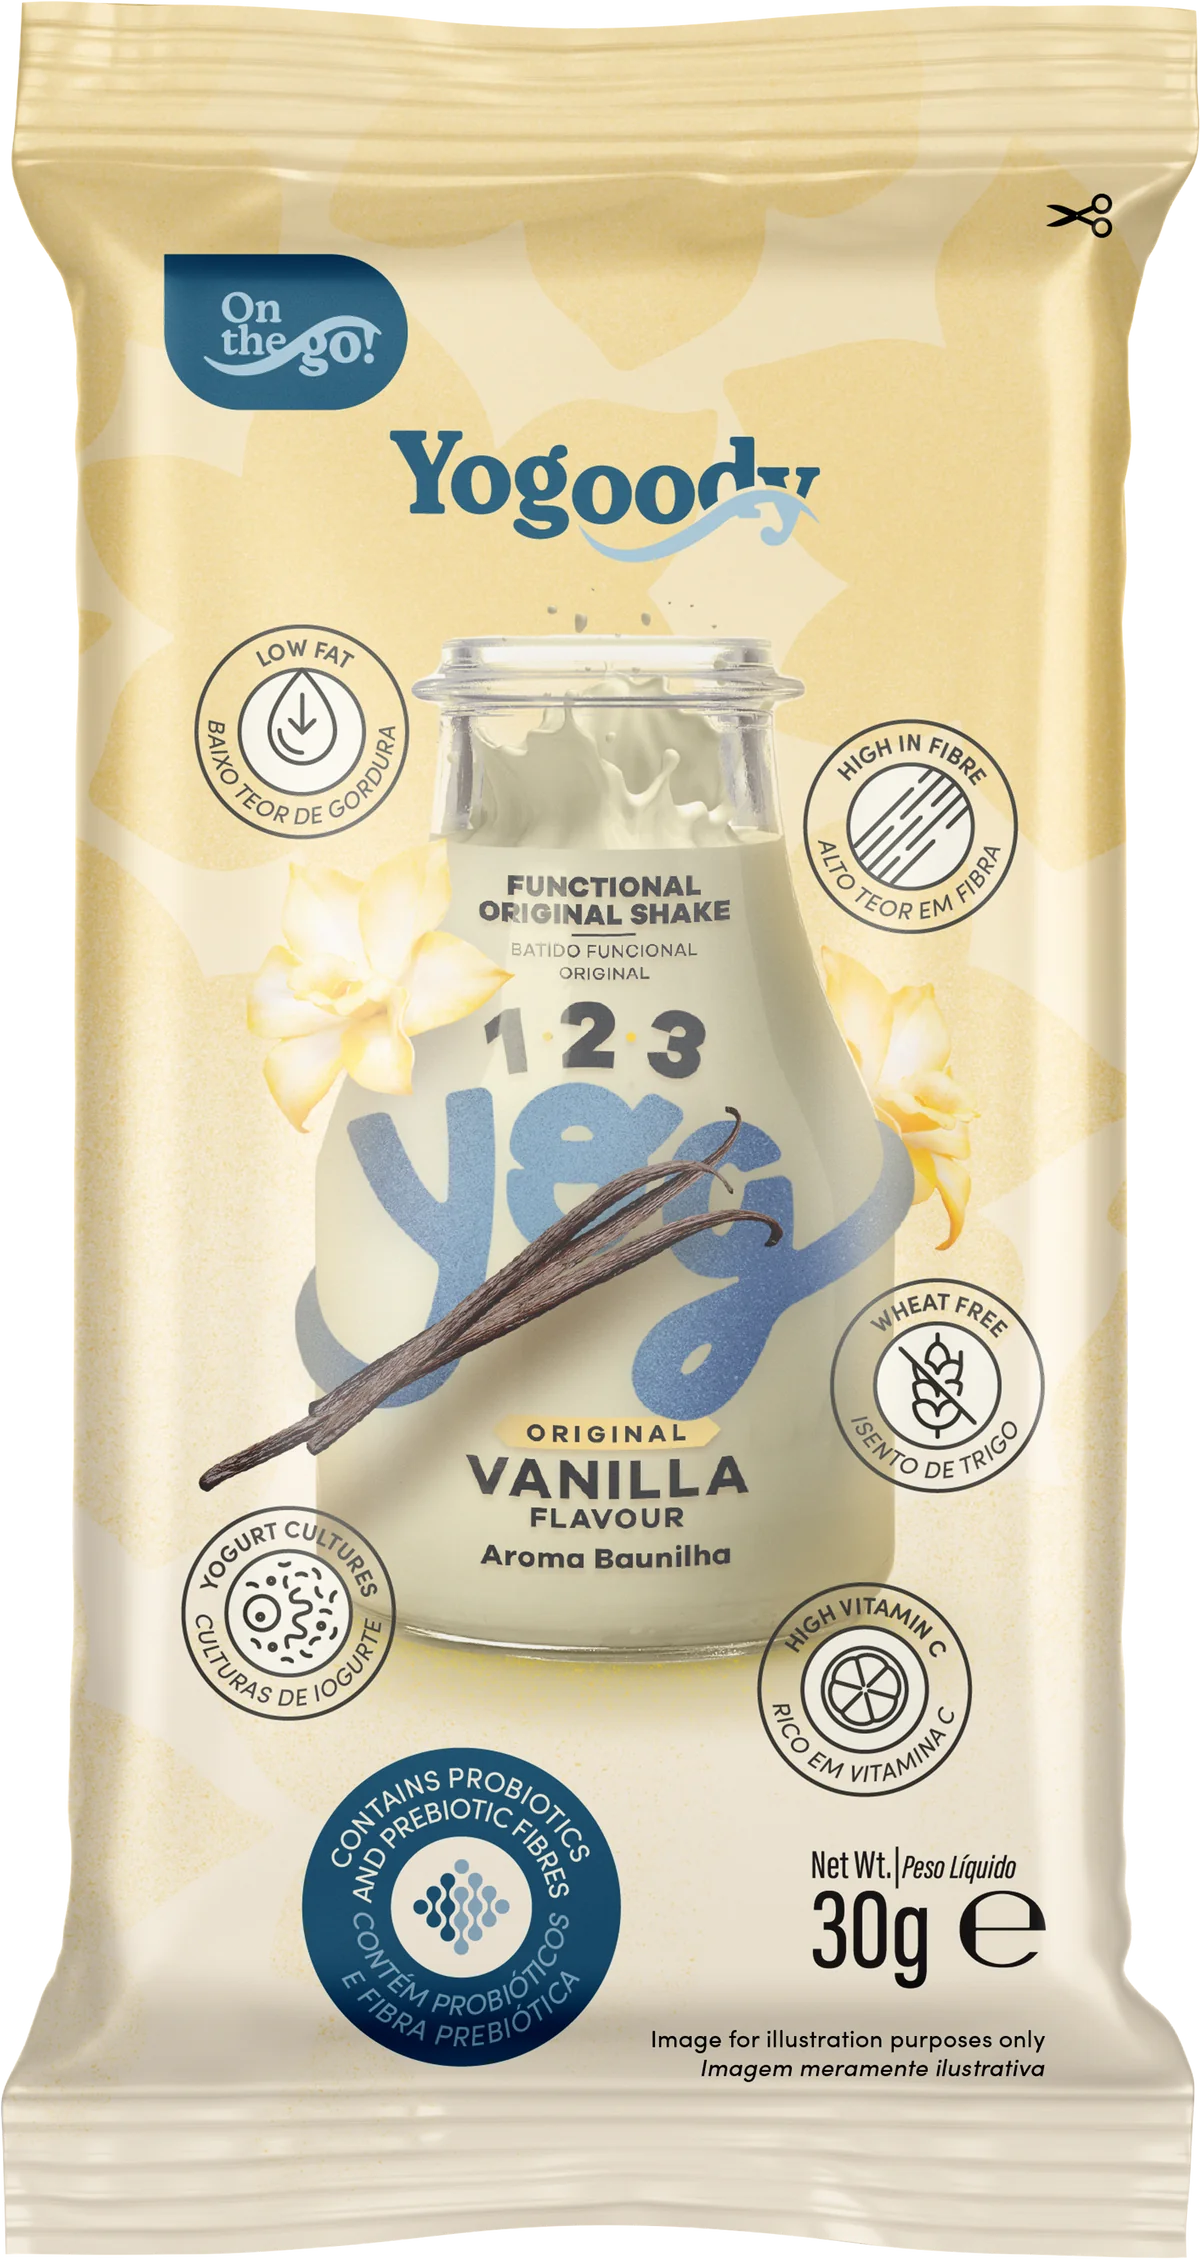 Welcome Pack - 1.2.3. YOG Original Vanilla and Wild Berry Flavoured Shakes (10 x 30g sachets + FREE shaker)